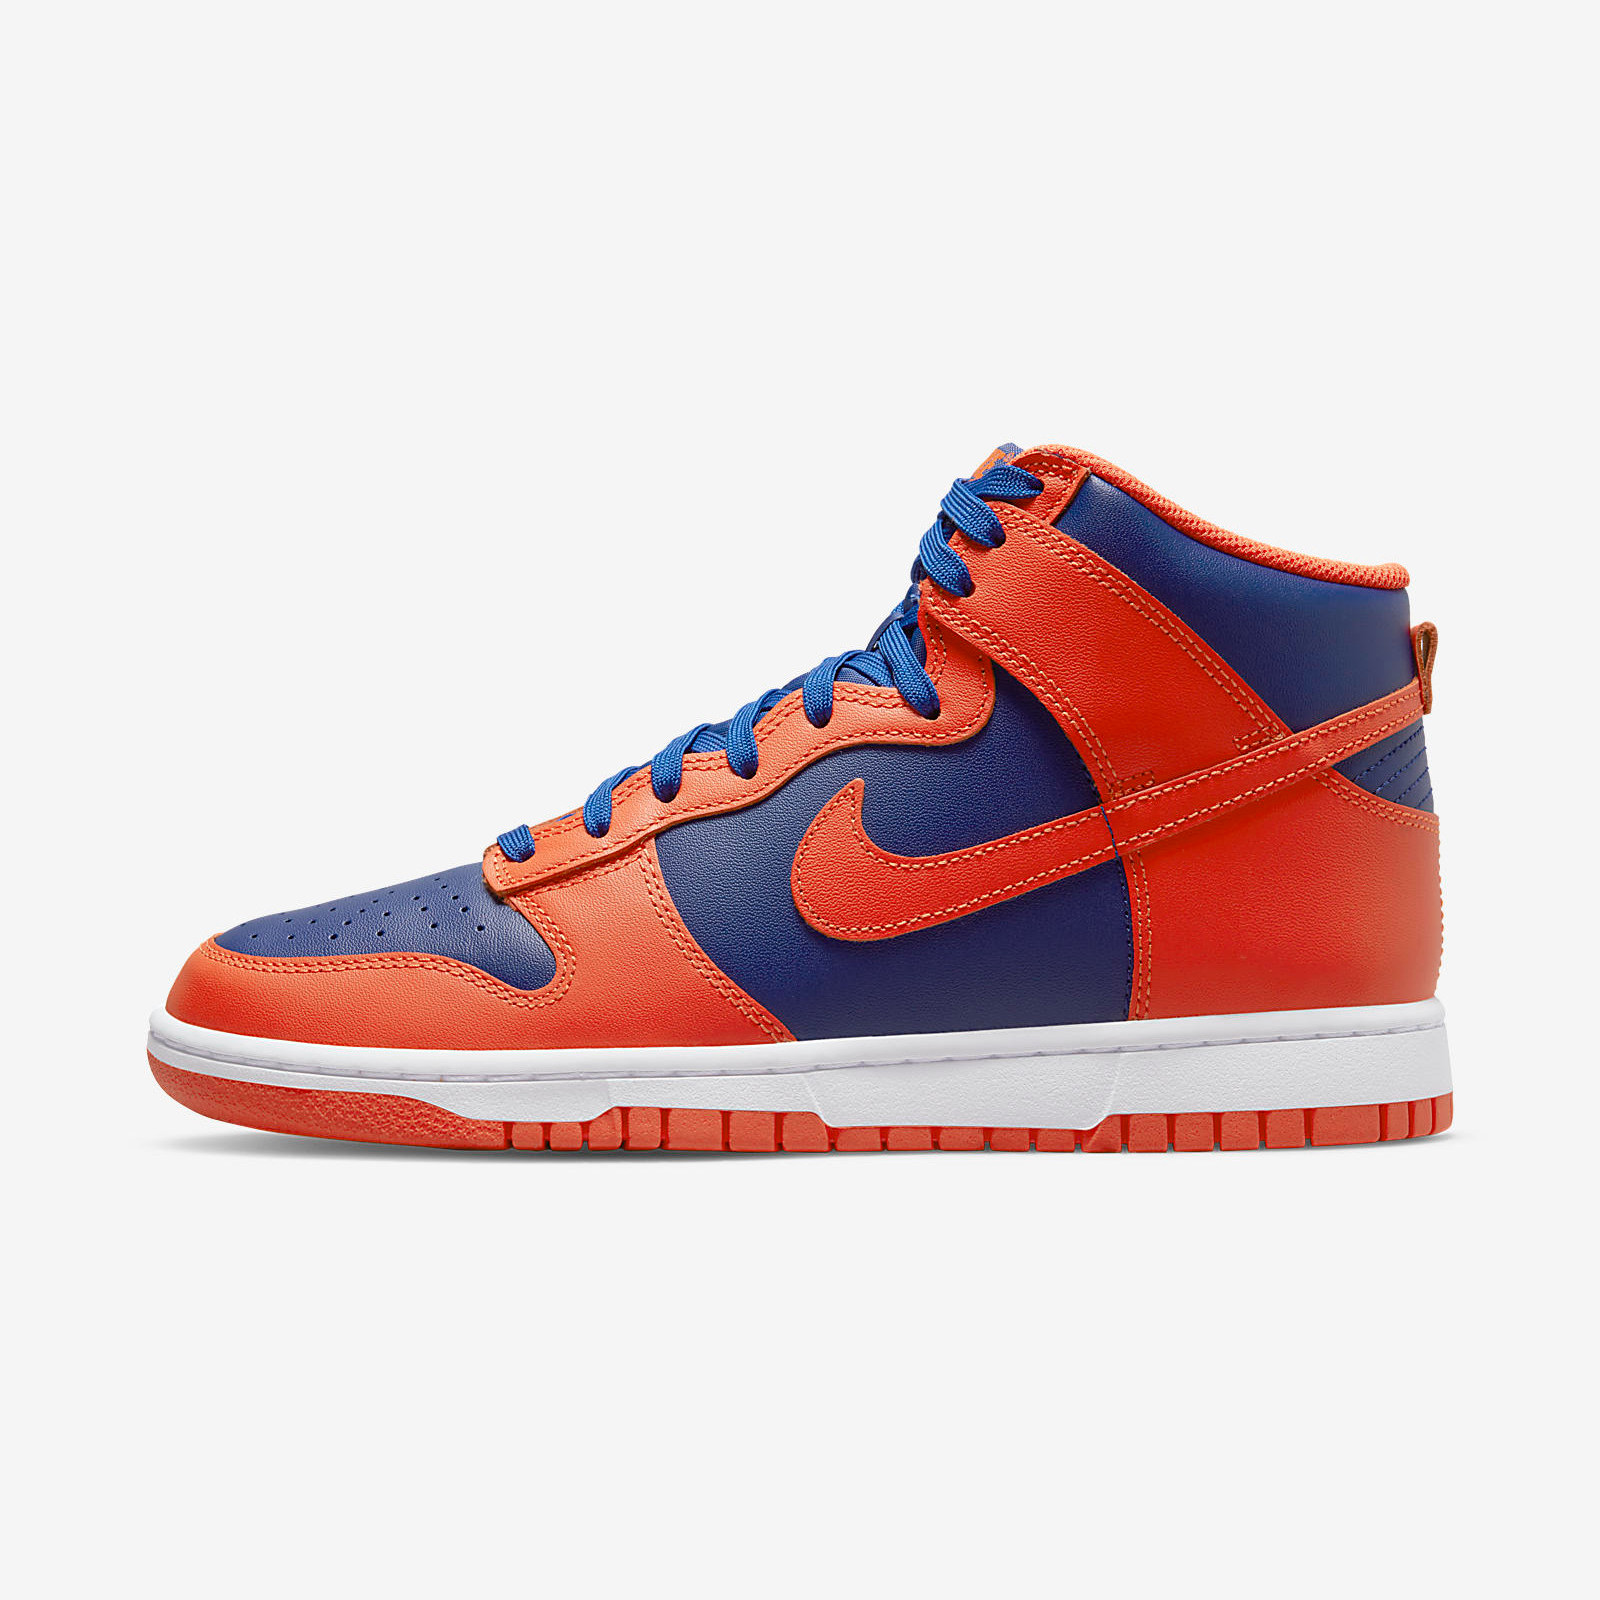 Nike Dunk High Retro
Orange / Blue